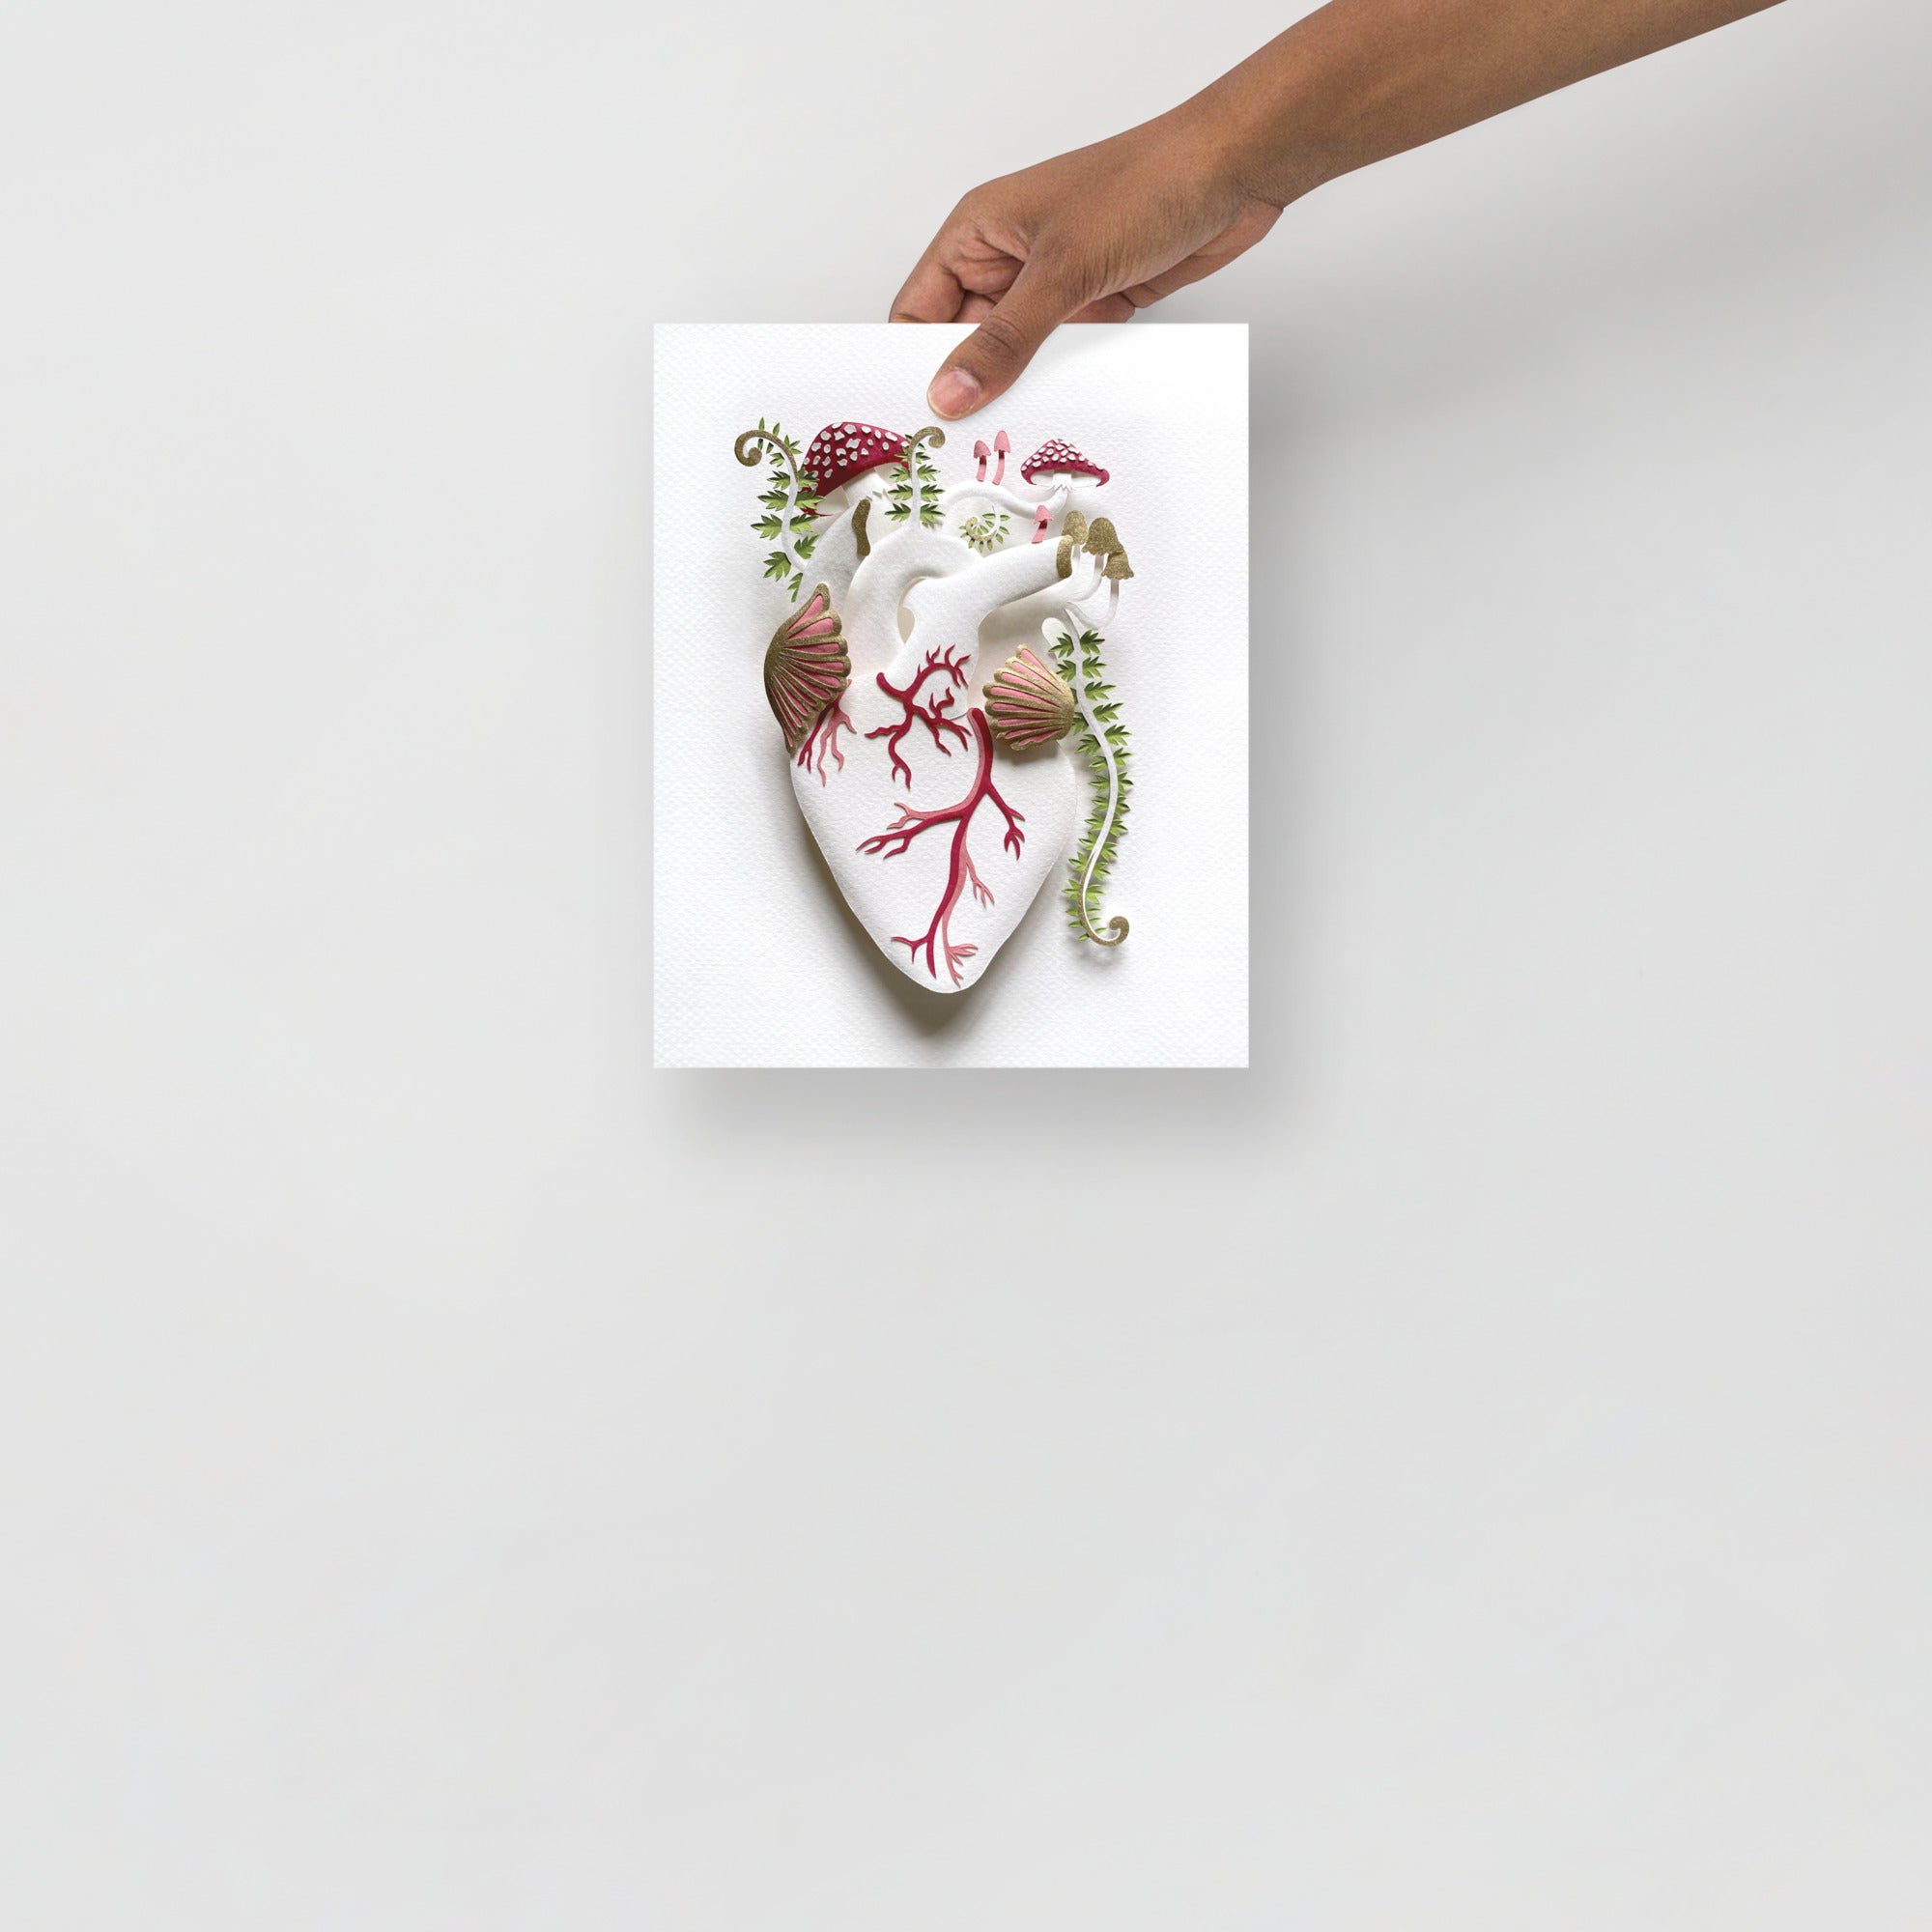 Healing Heart: Fly Agaric 8" x 10" print